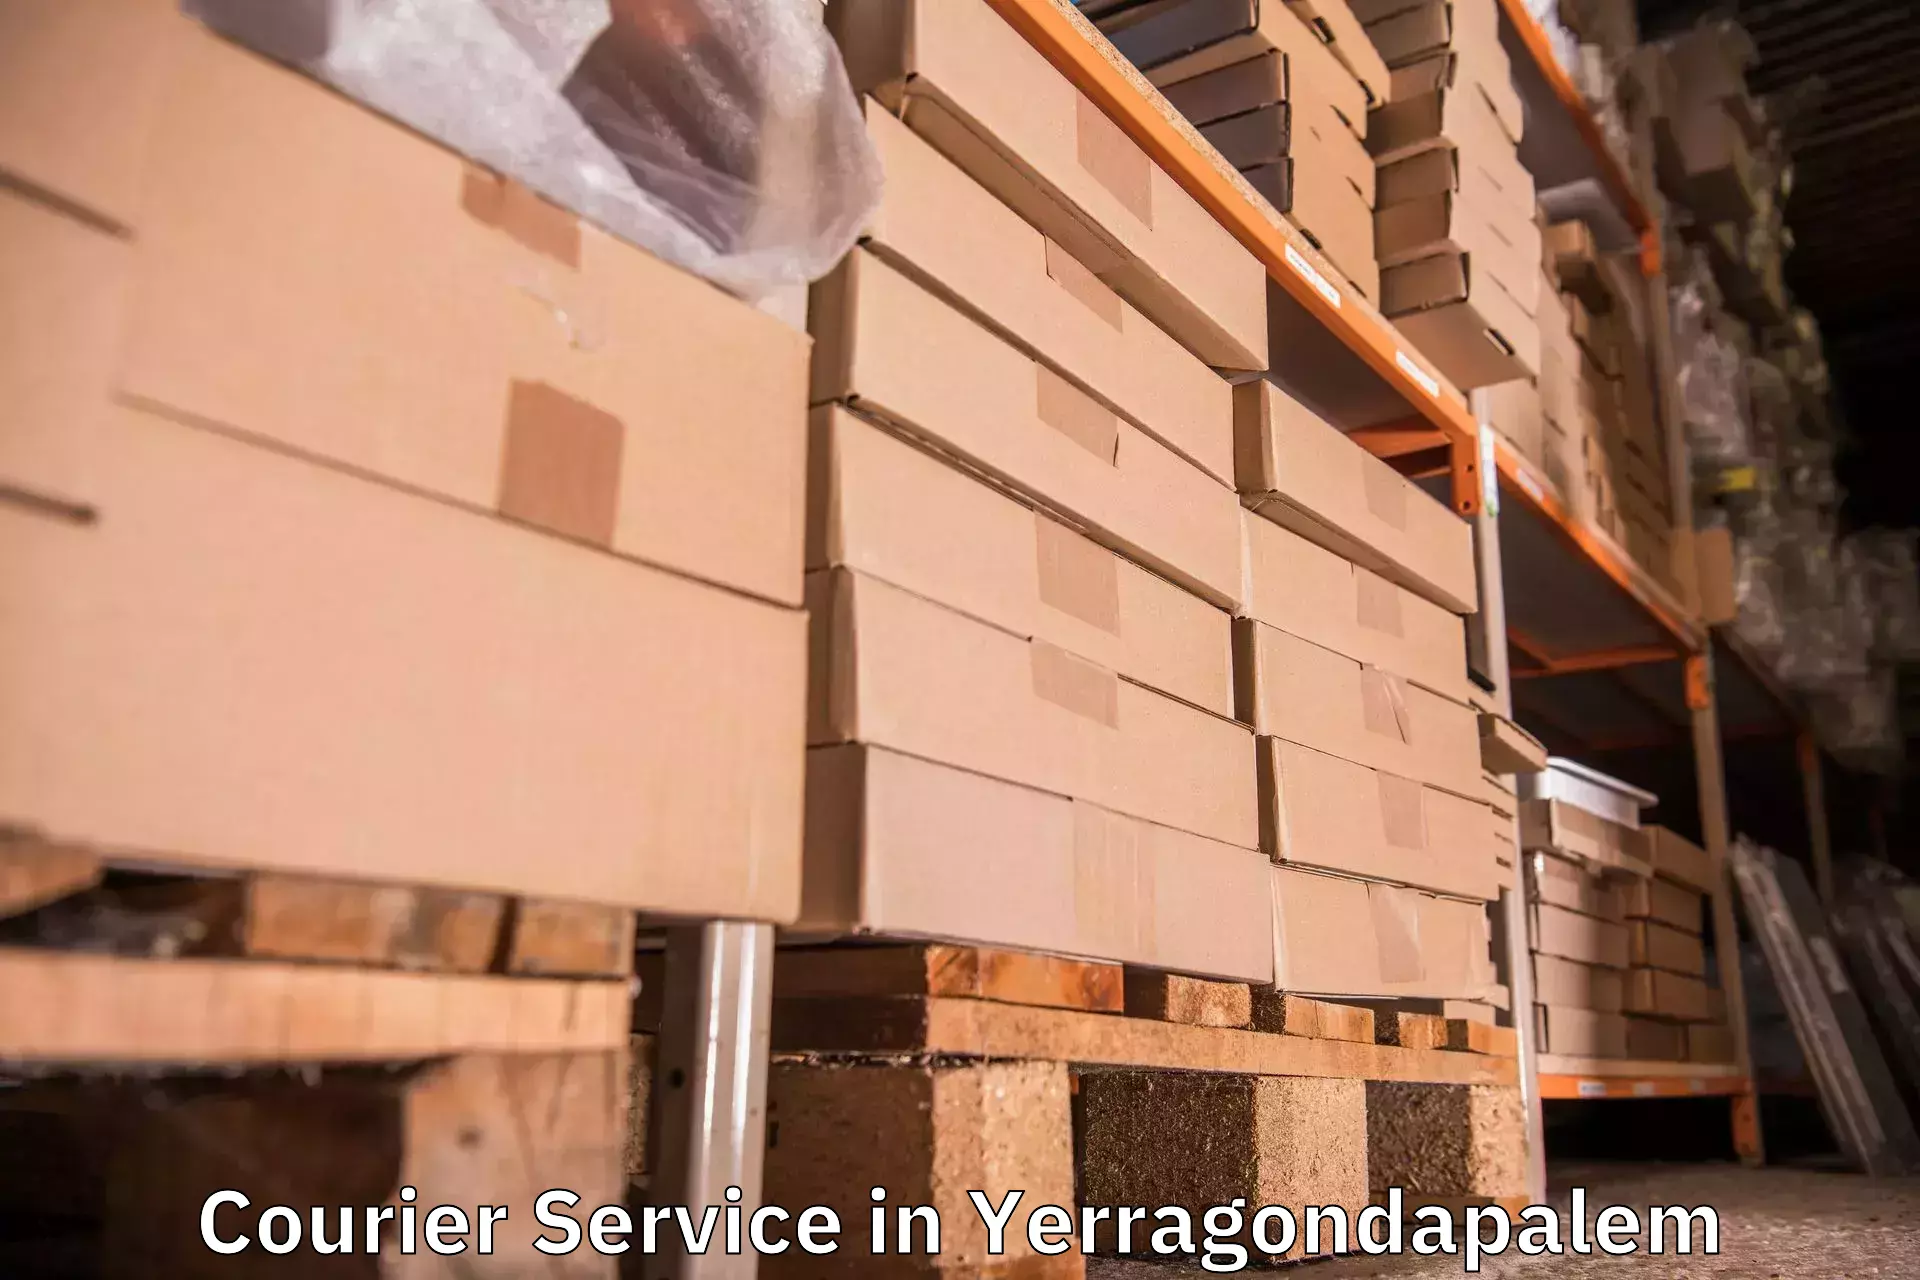 Multi-package shipping in Yerragondapalem